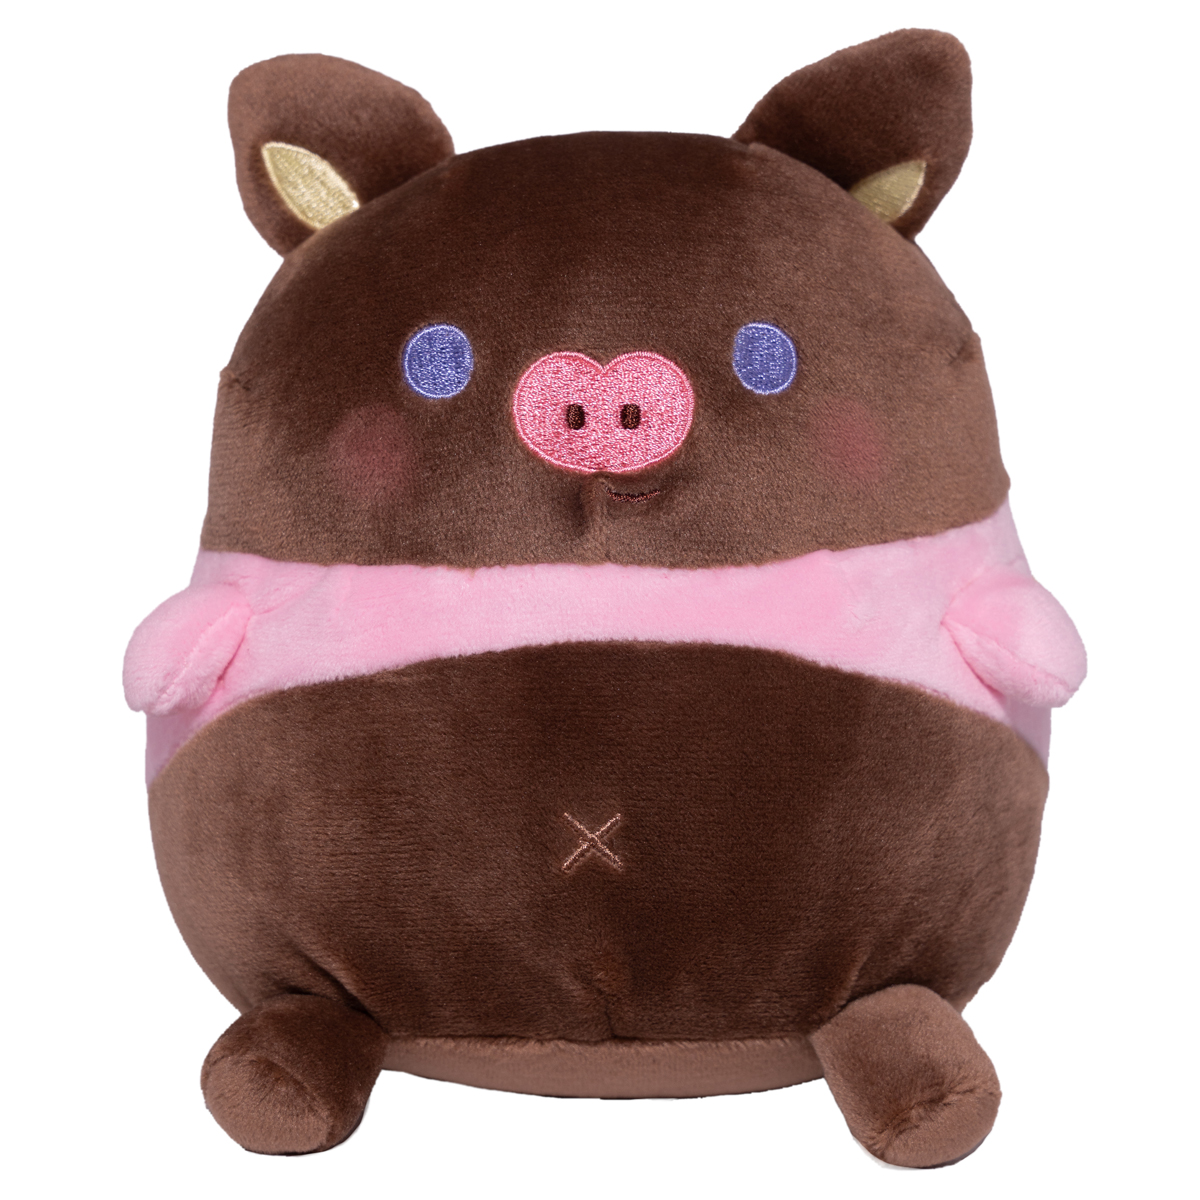 Soft & Squishy Pig Plush Doll, Brown, 6 Inches, Kawaii Plushie